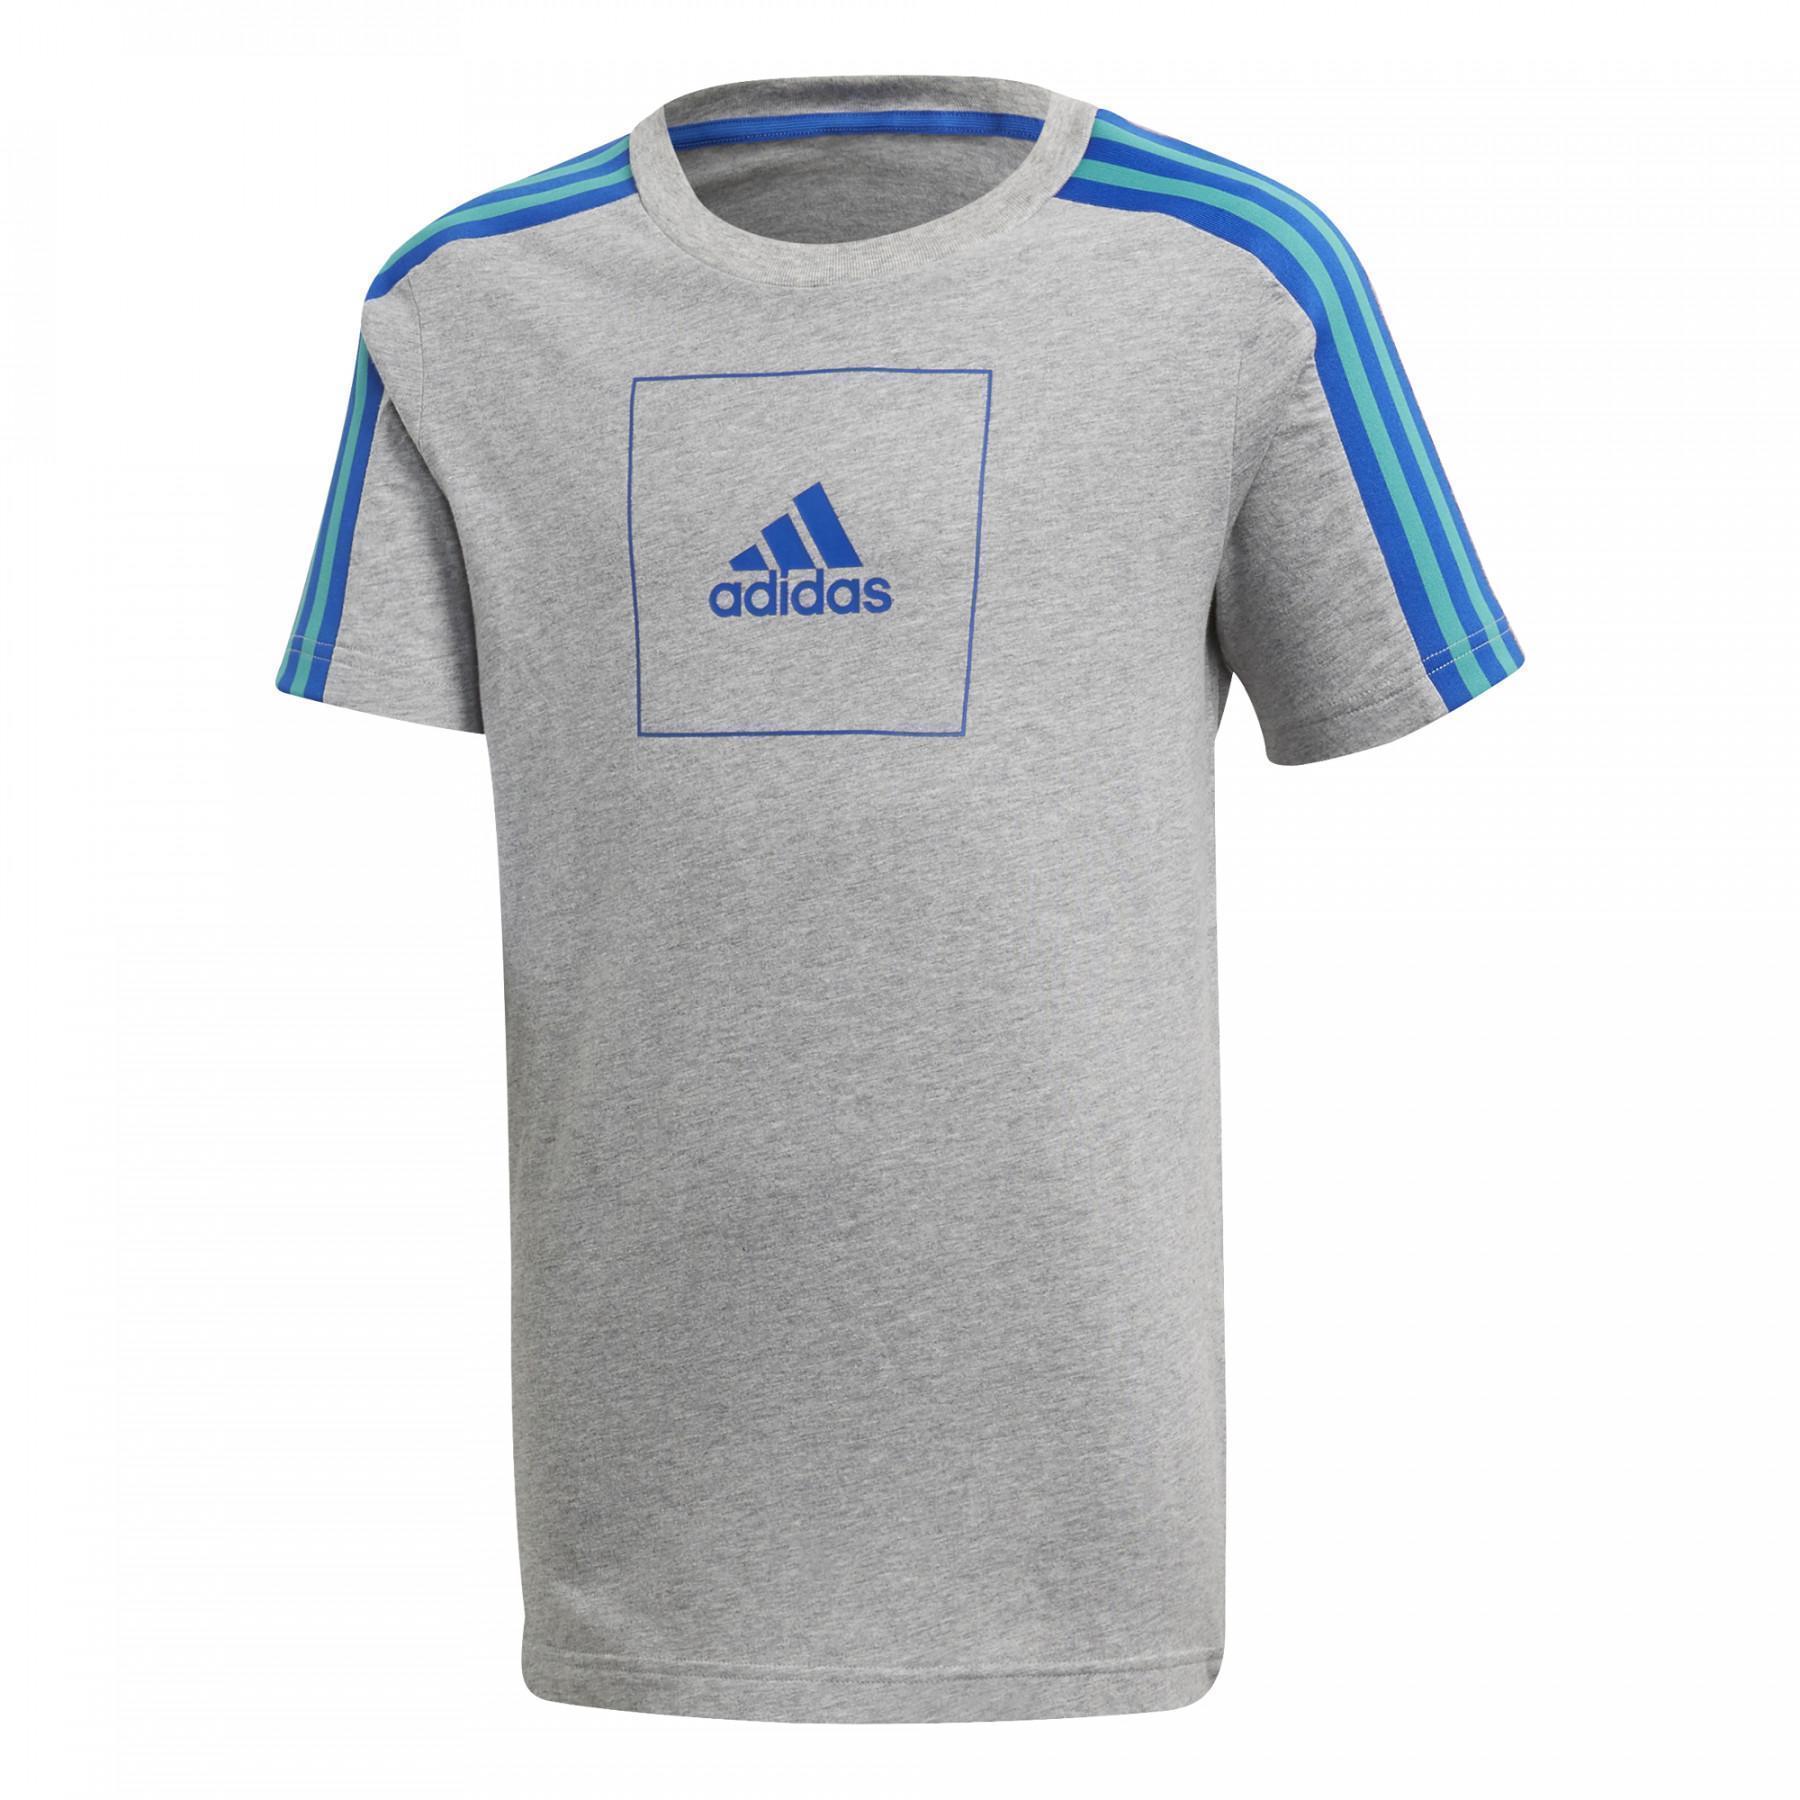 Kinder-T-shirt adidas Athletics Club